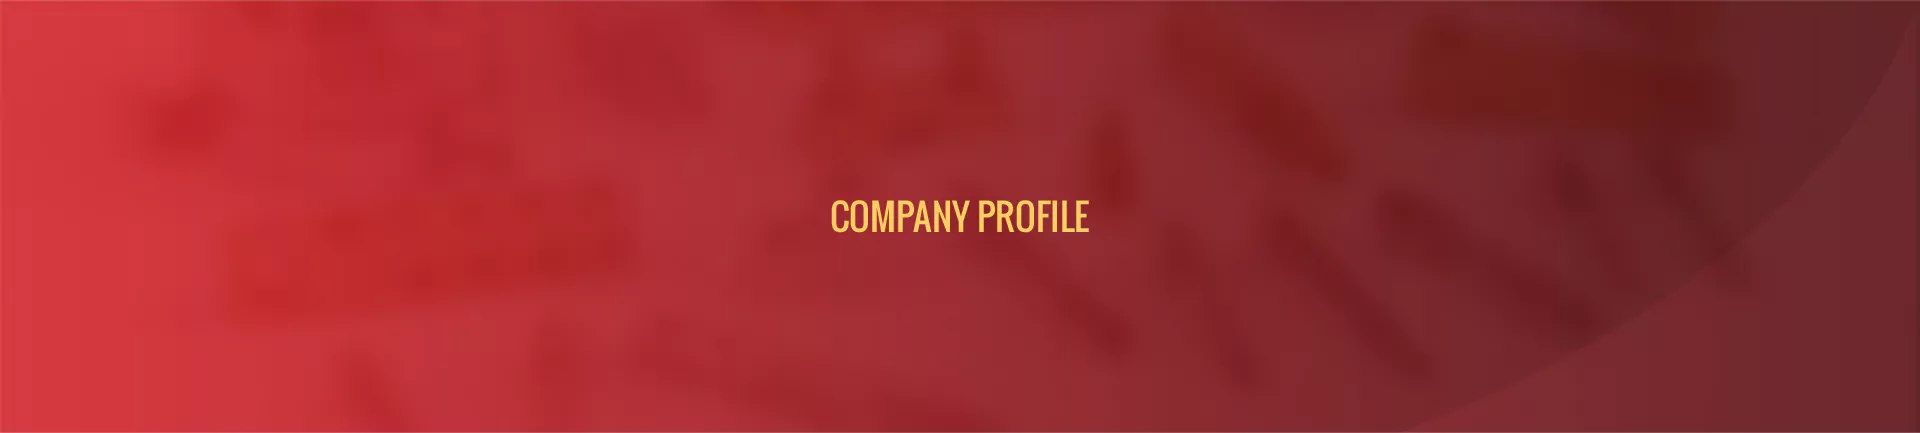 profile-banner